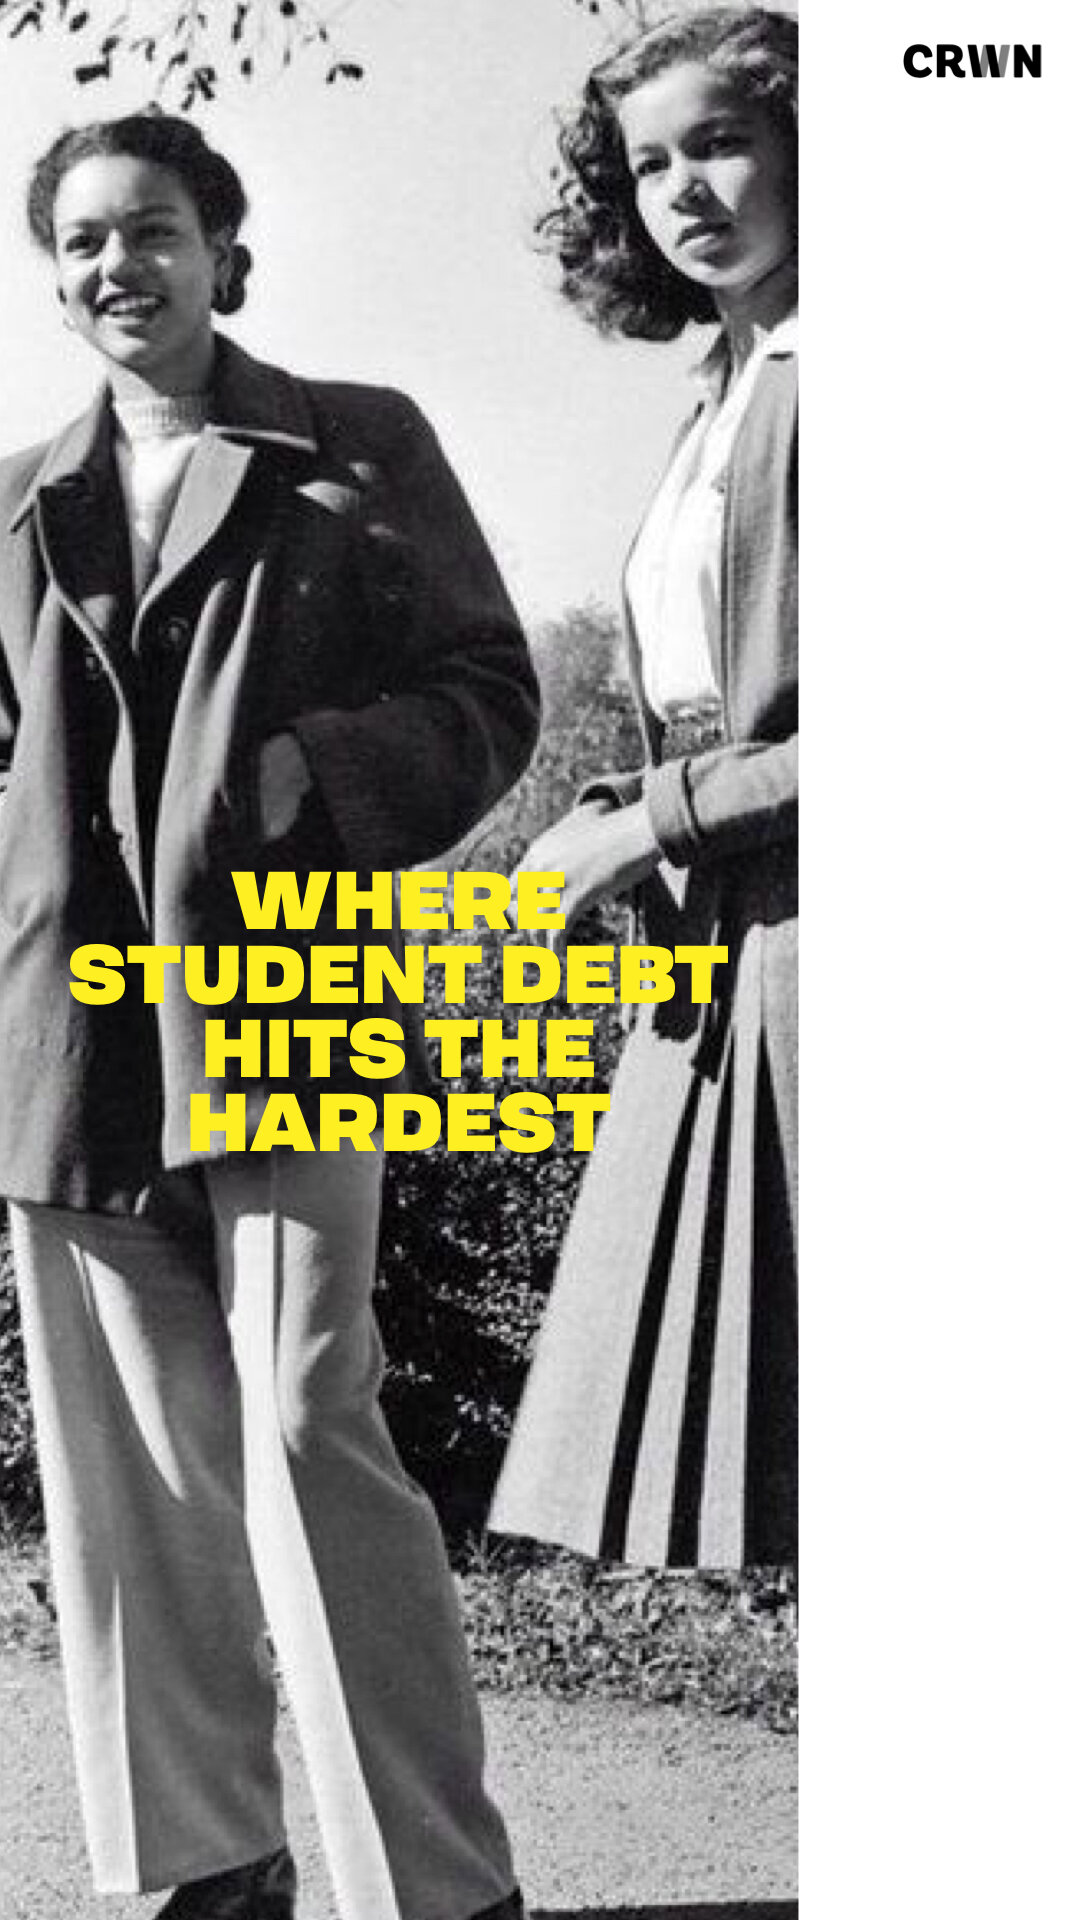 Where student debt hits hardest.001.jpeg